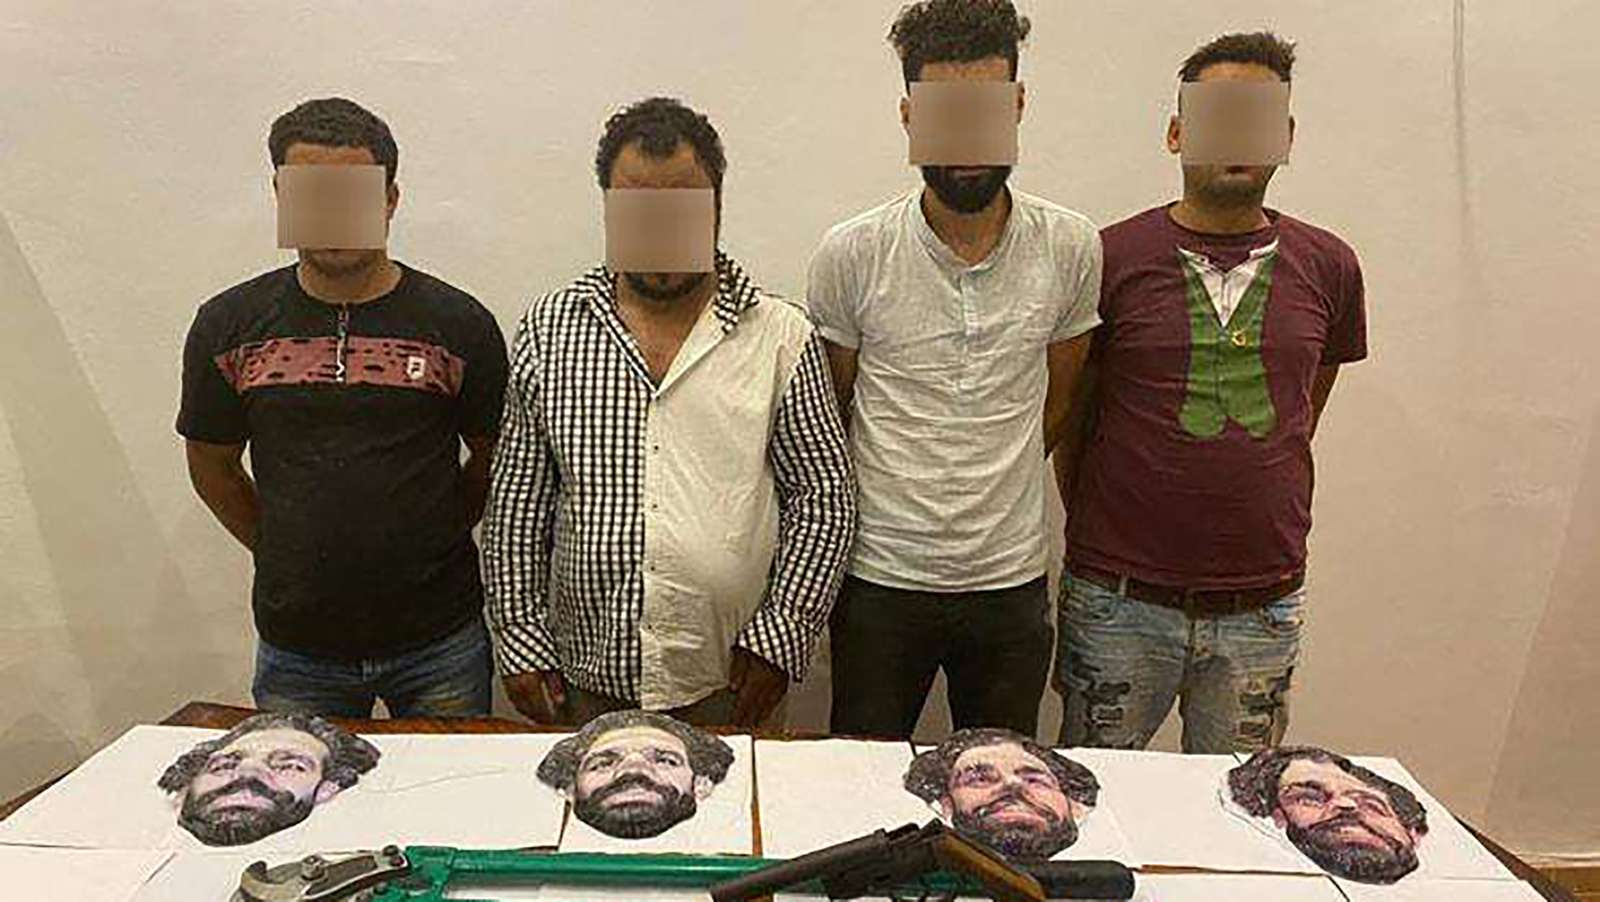 Salah mask-wearing robbers caught by Egyptian police - Bóng Đá